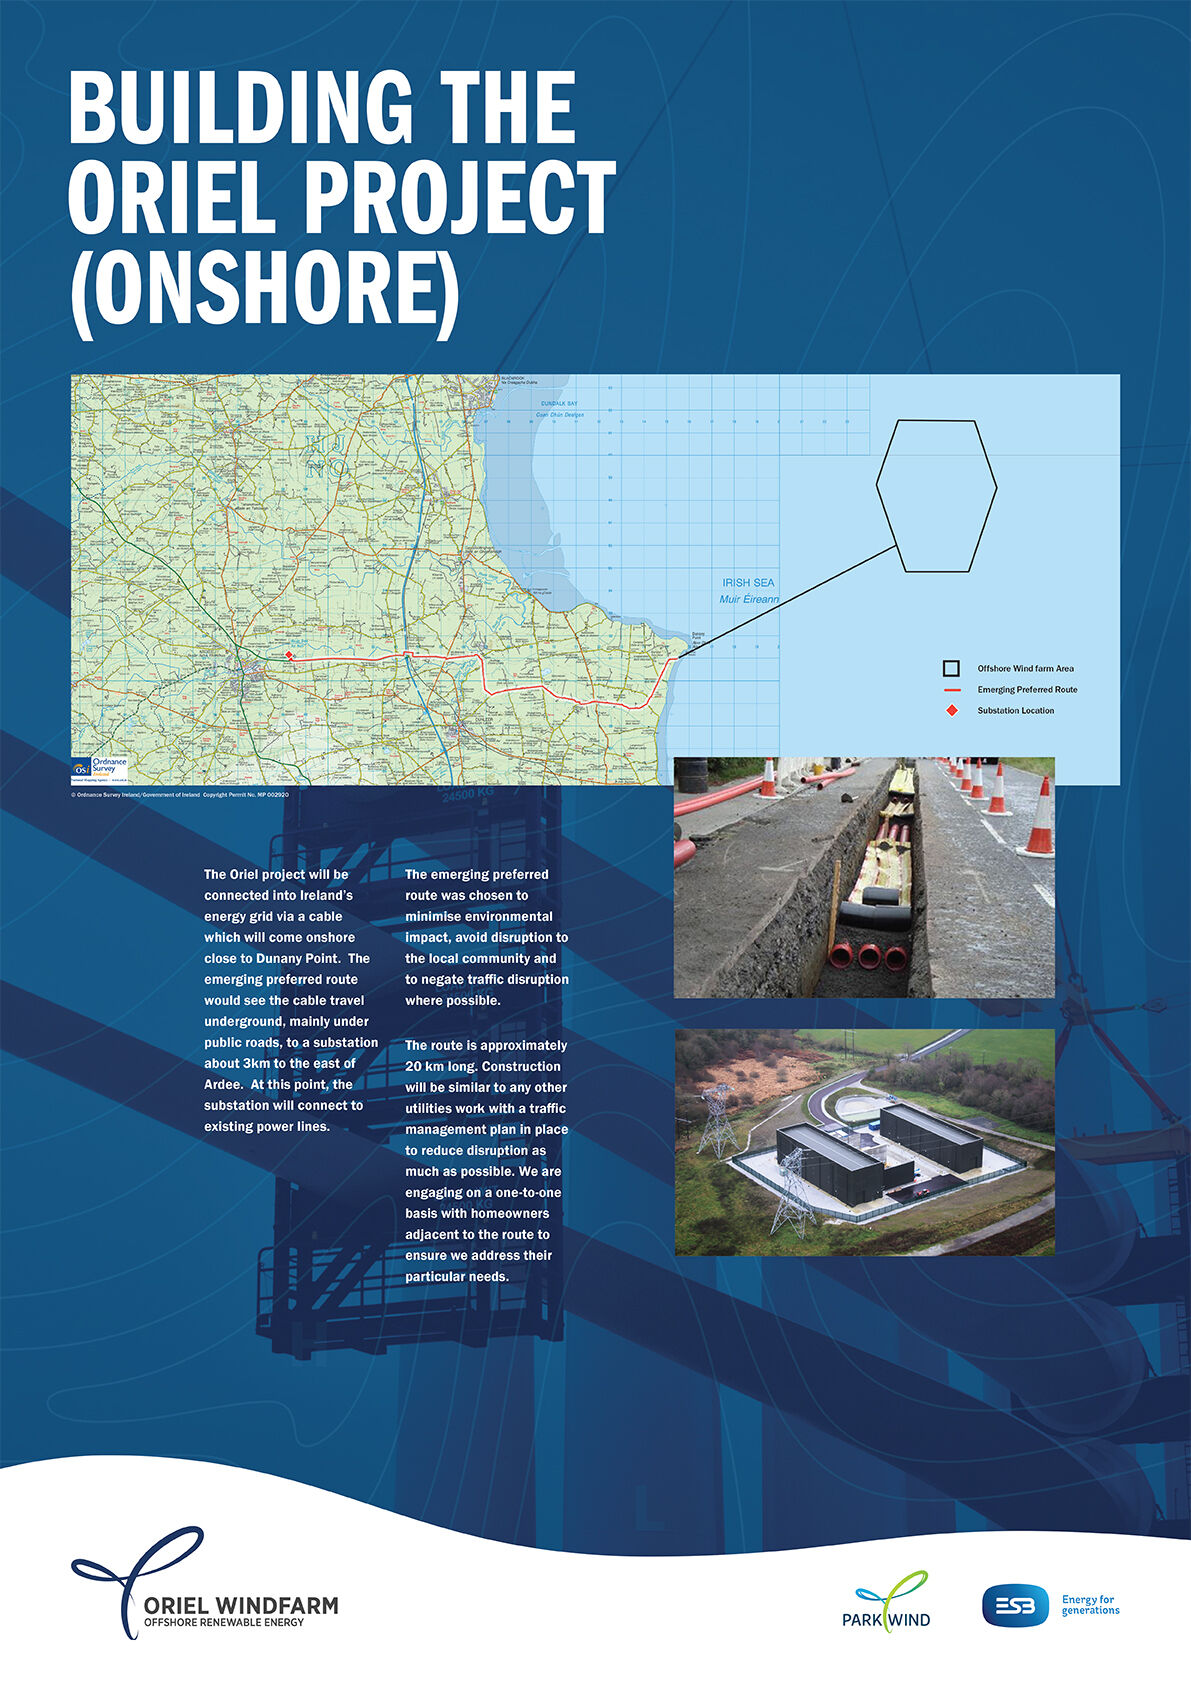 Building the Oriel project onshore